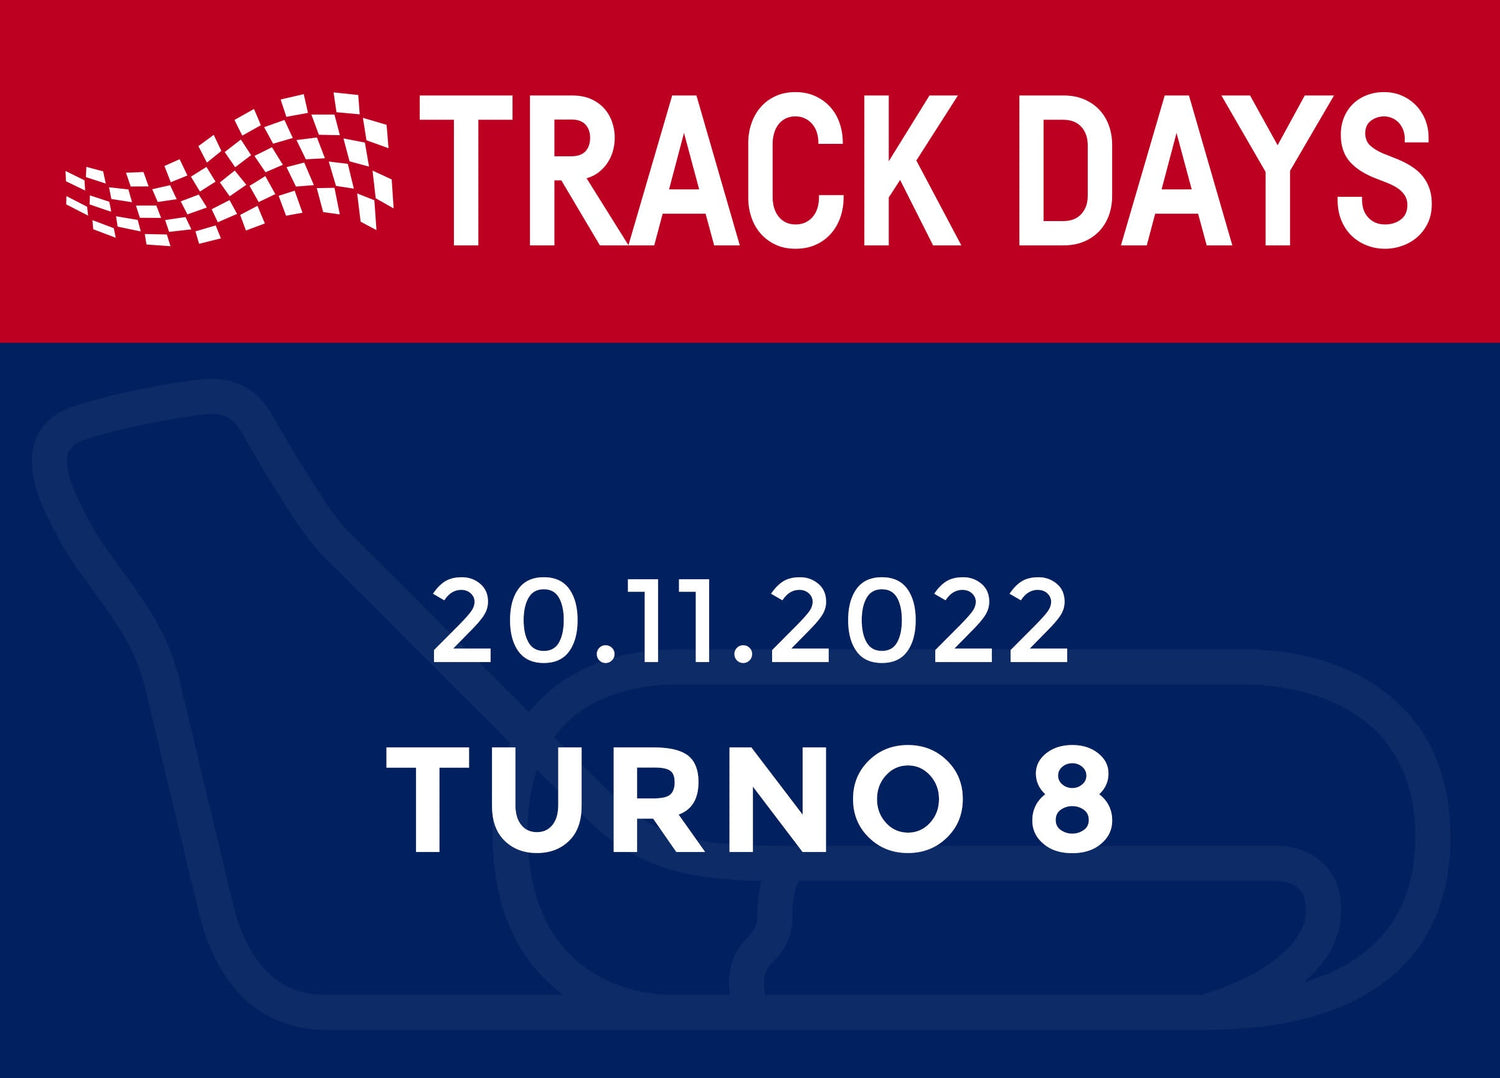 TRACK DAYS 20.11.22 TURNO 8